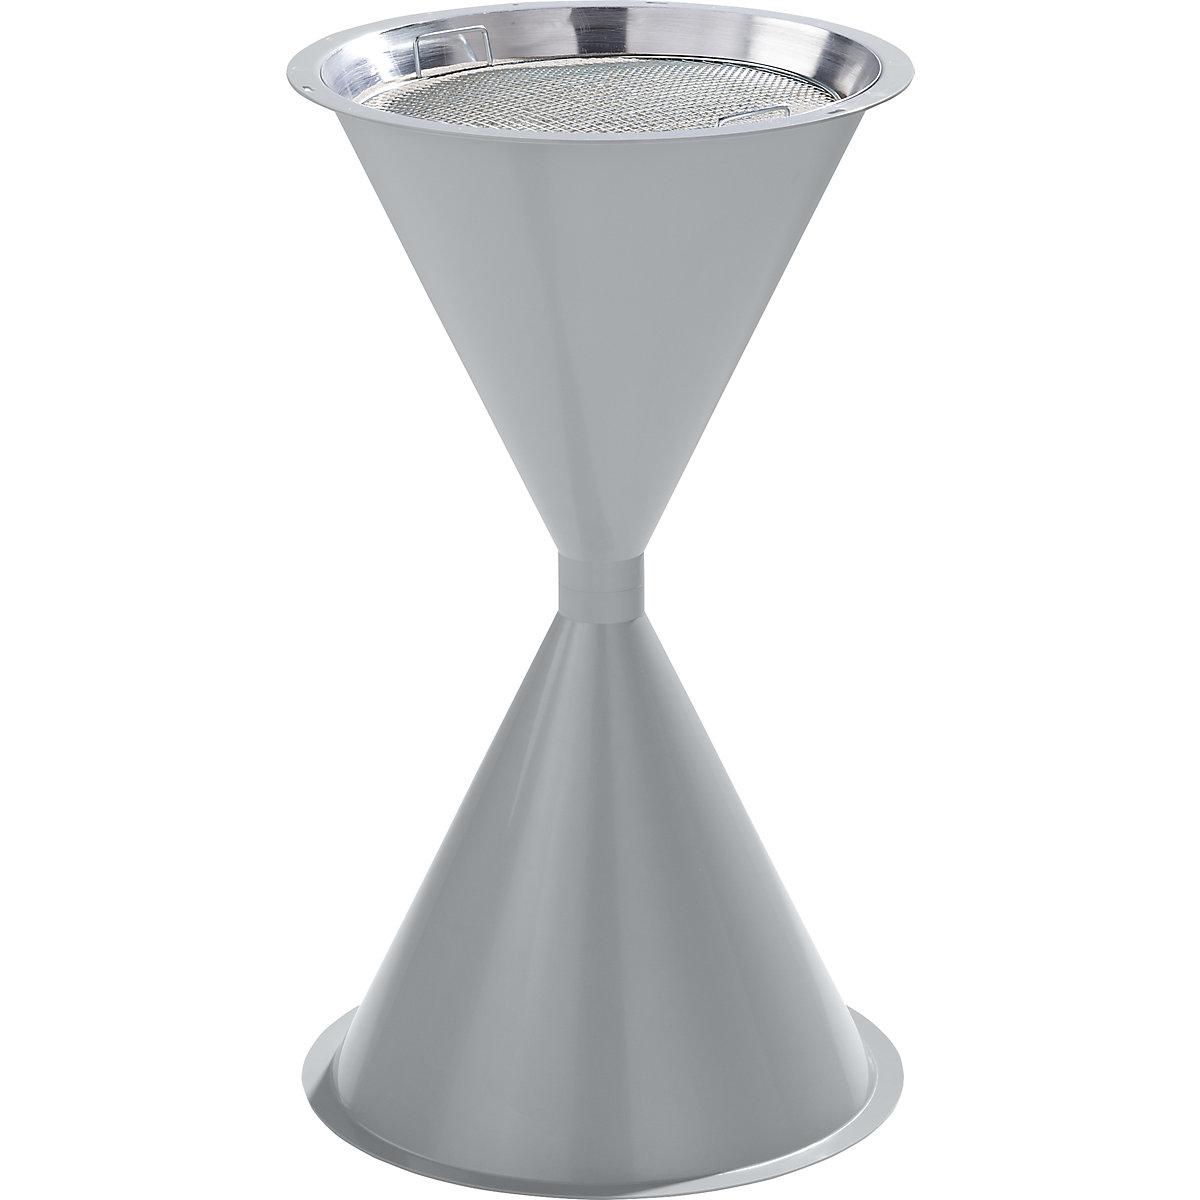 VAR – Conical pedestal ashtray made of plastic